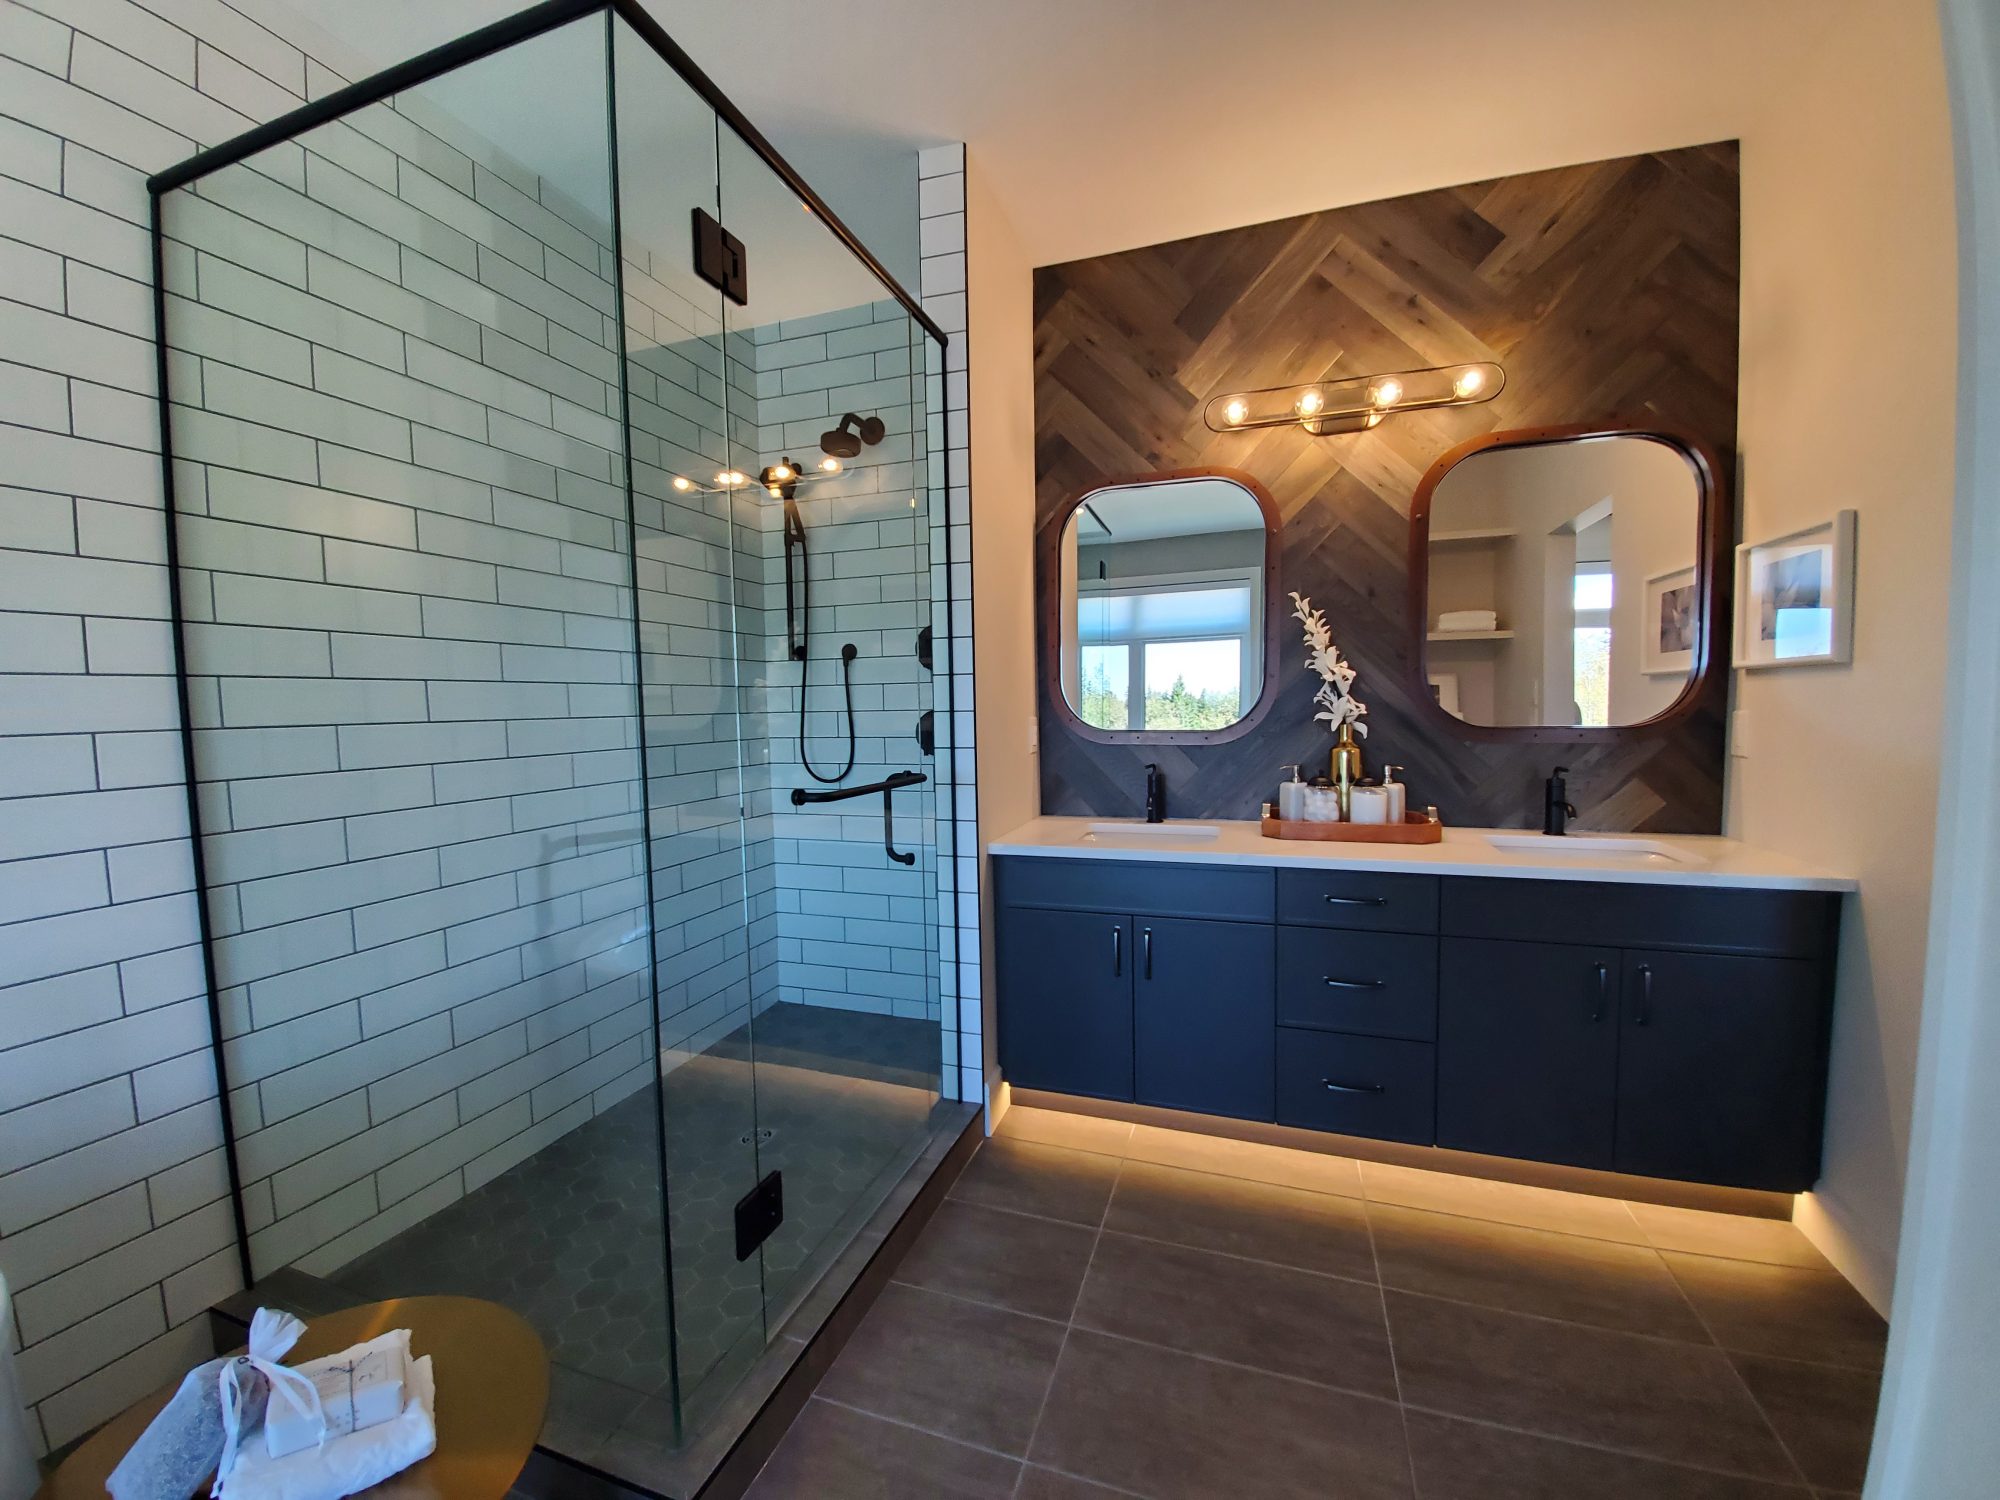 Large glass shower, dark tile floor, black cabinets, double sinks. 